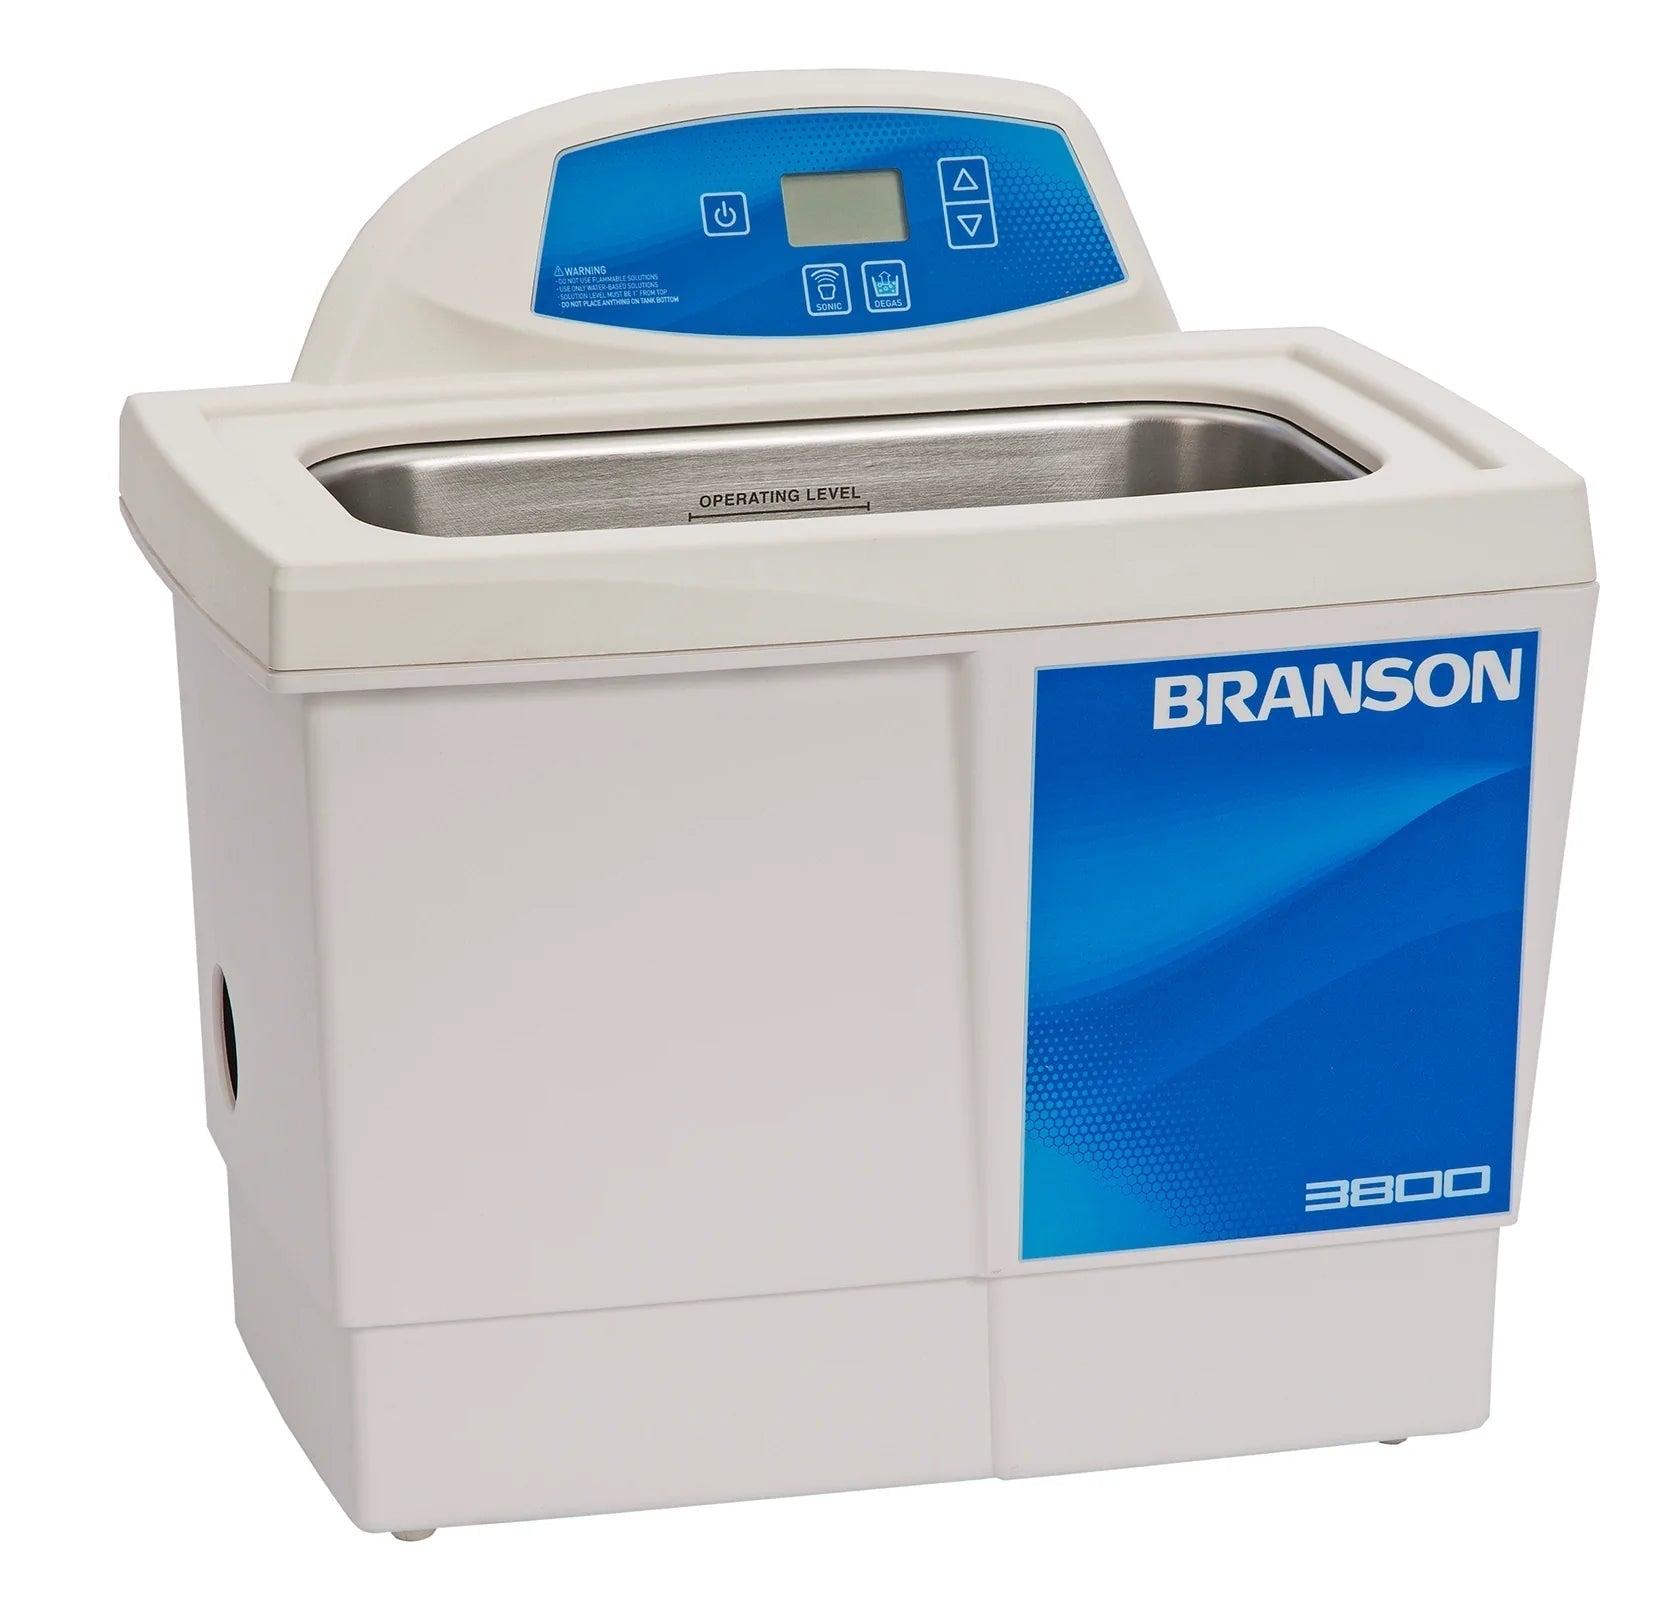 branson-cpx5800-2-5gal-ultrasonic-cleaner-no-heat-115v-60hz-cpx-952-519r